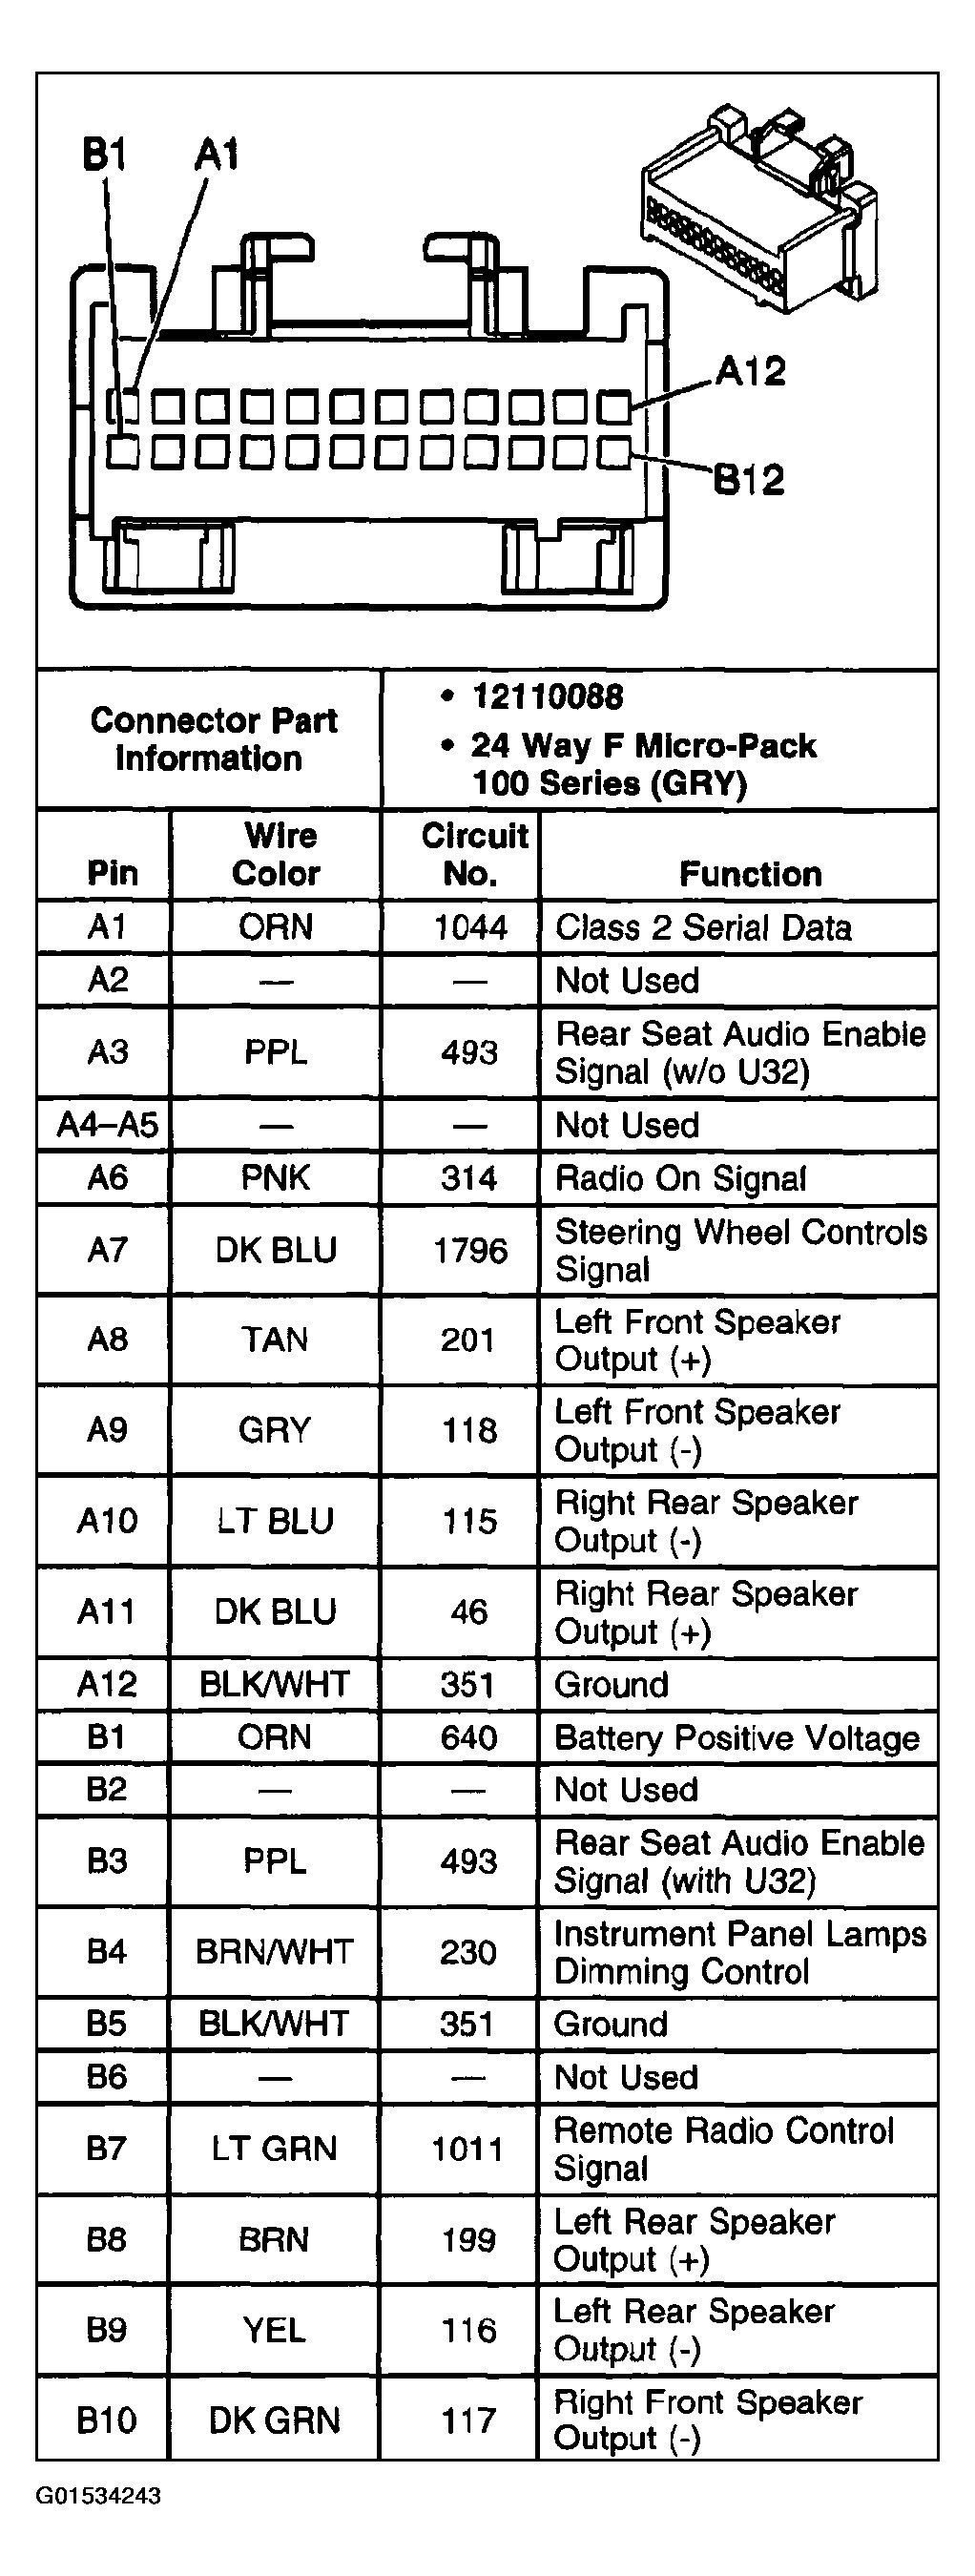 2000 Chevy Cavalier Radio Wiring Diagram Gallery 2001 Chevy Cavalier Radio Wiring Diagram Harness New